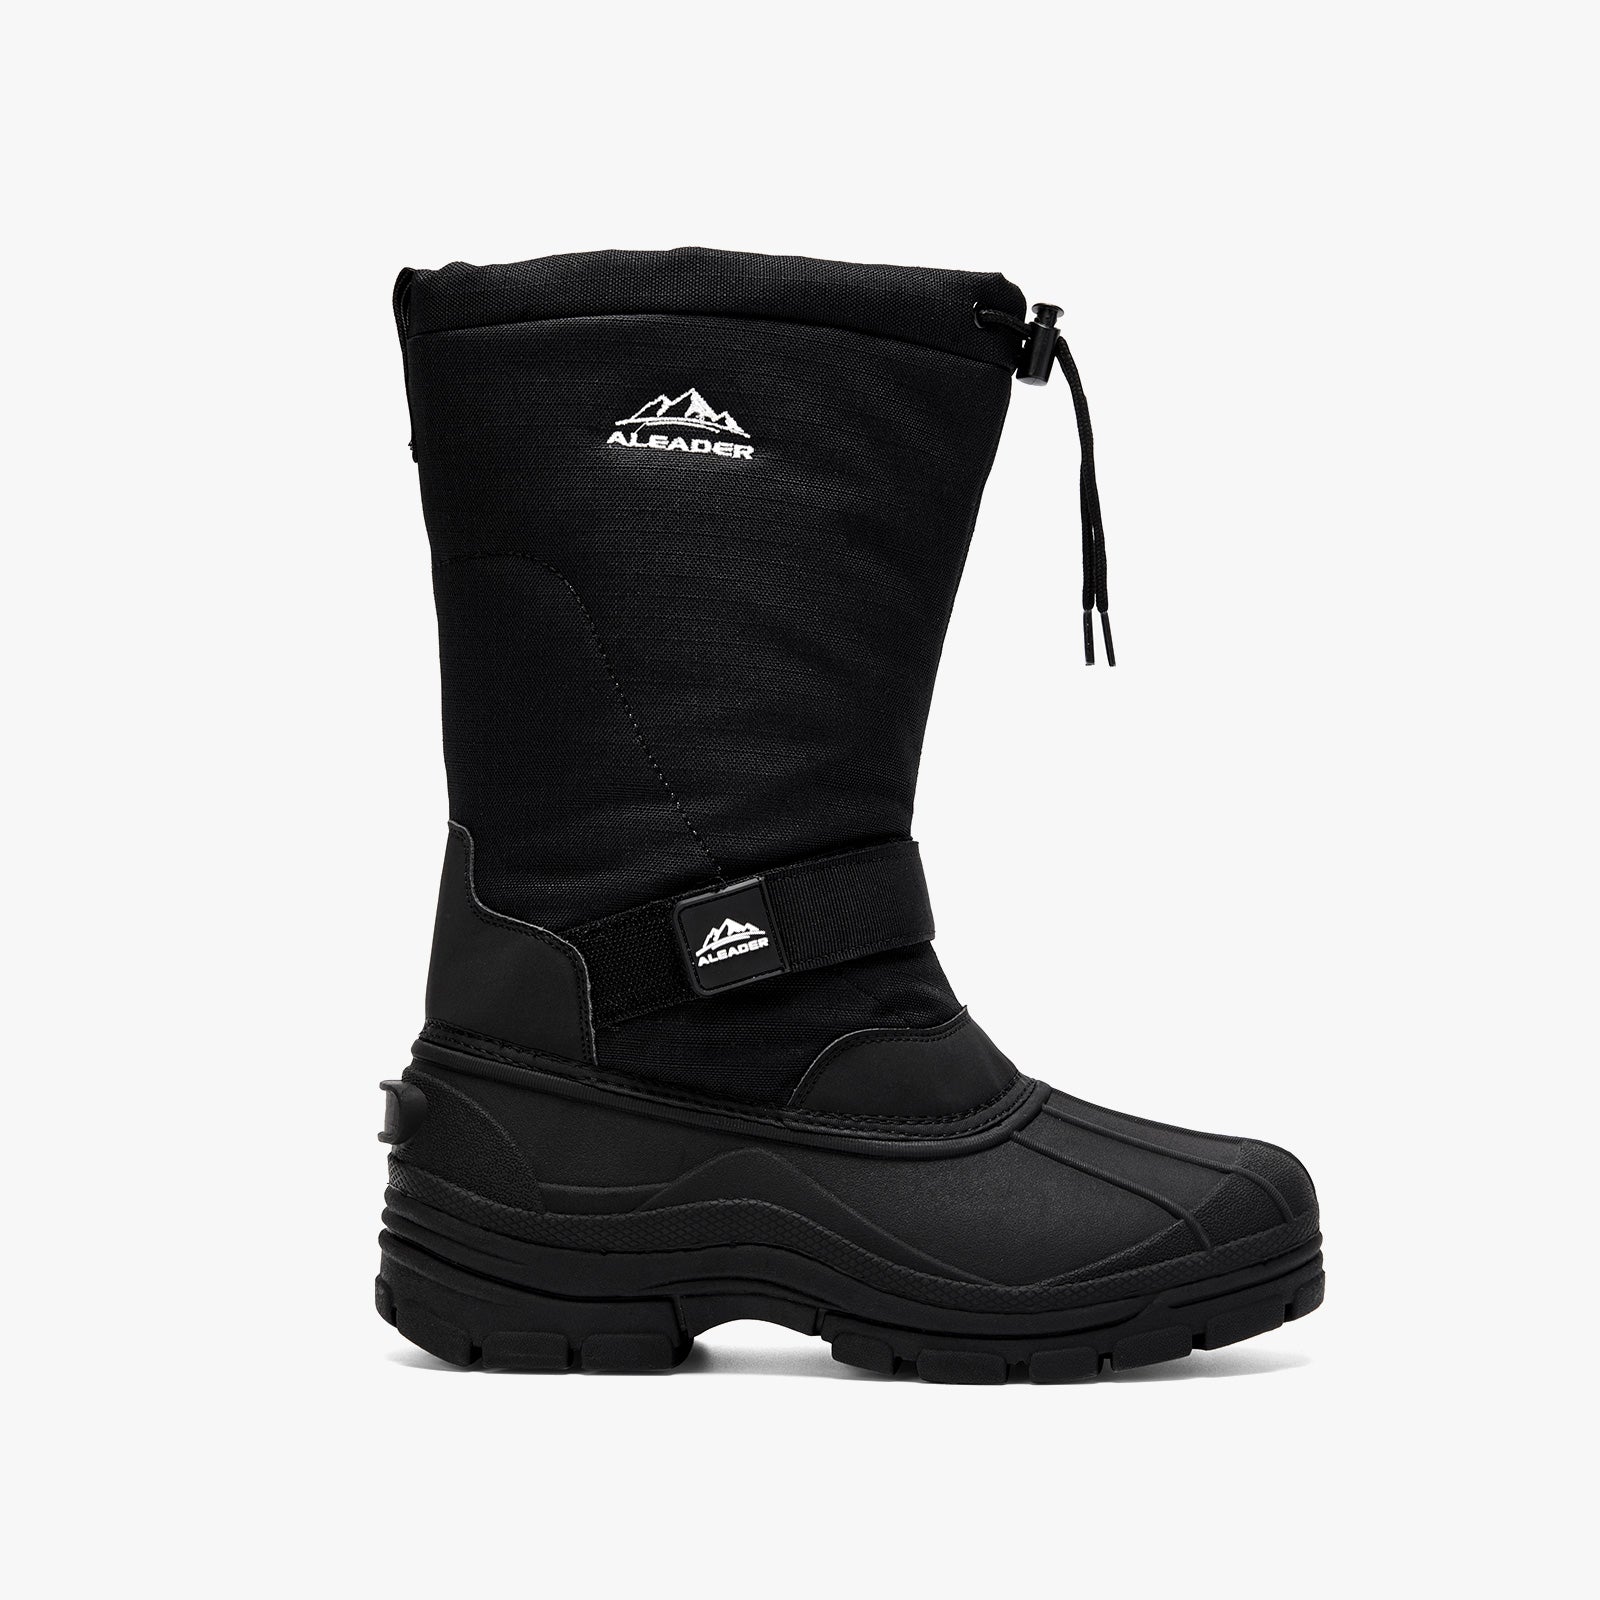 Aleader Men’s Insulated Waterproof Winter Snow Boots - Black/Buckle